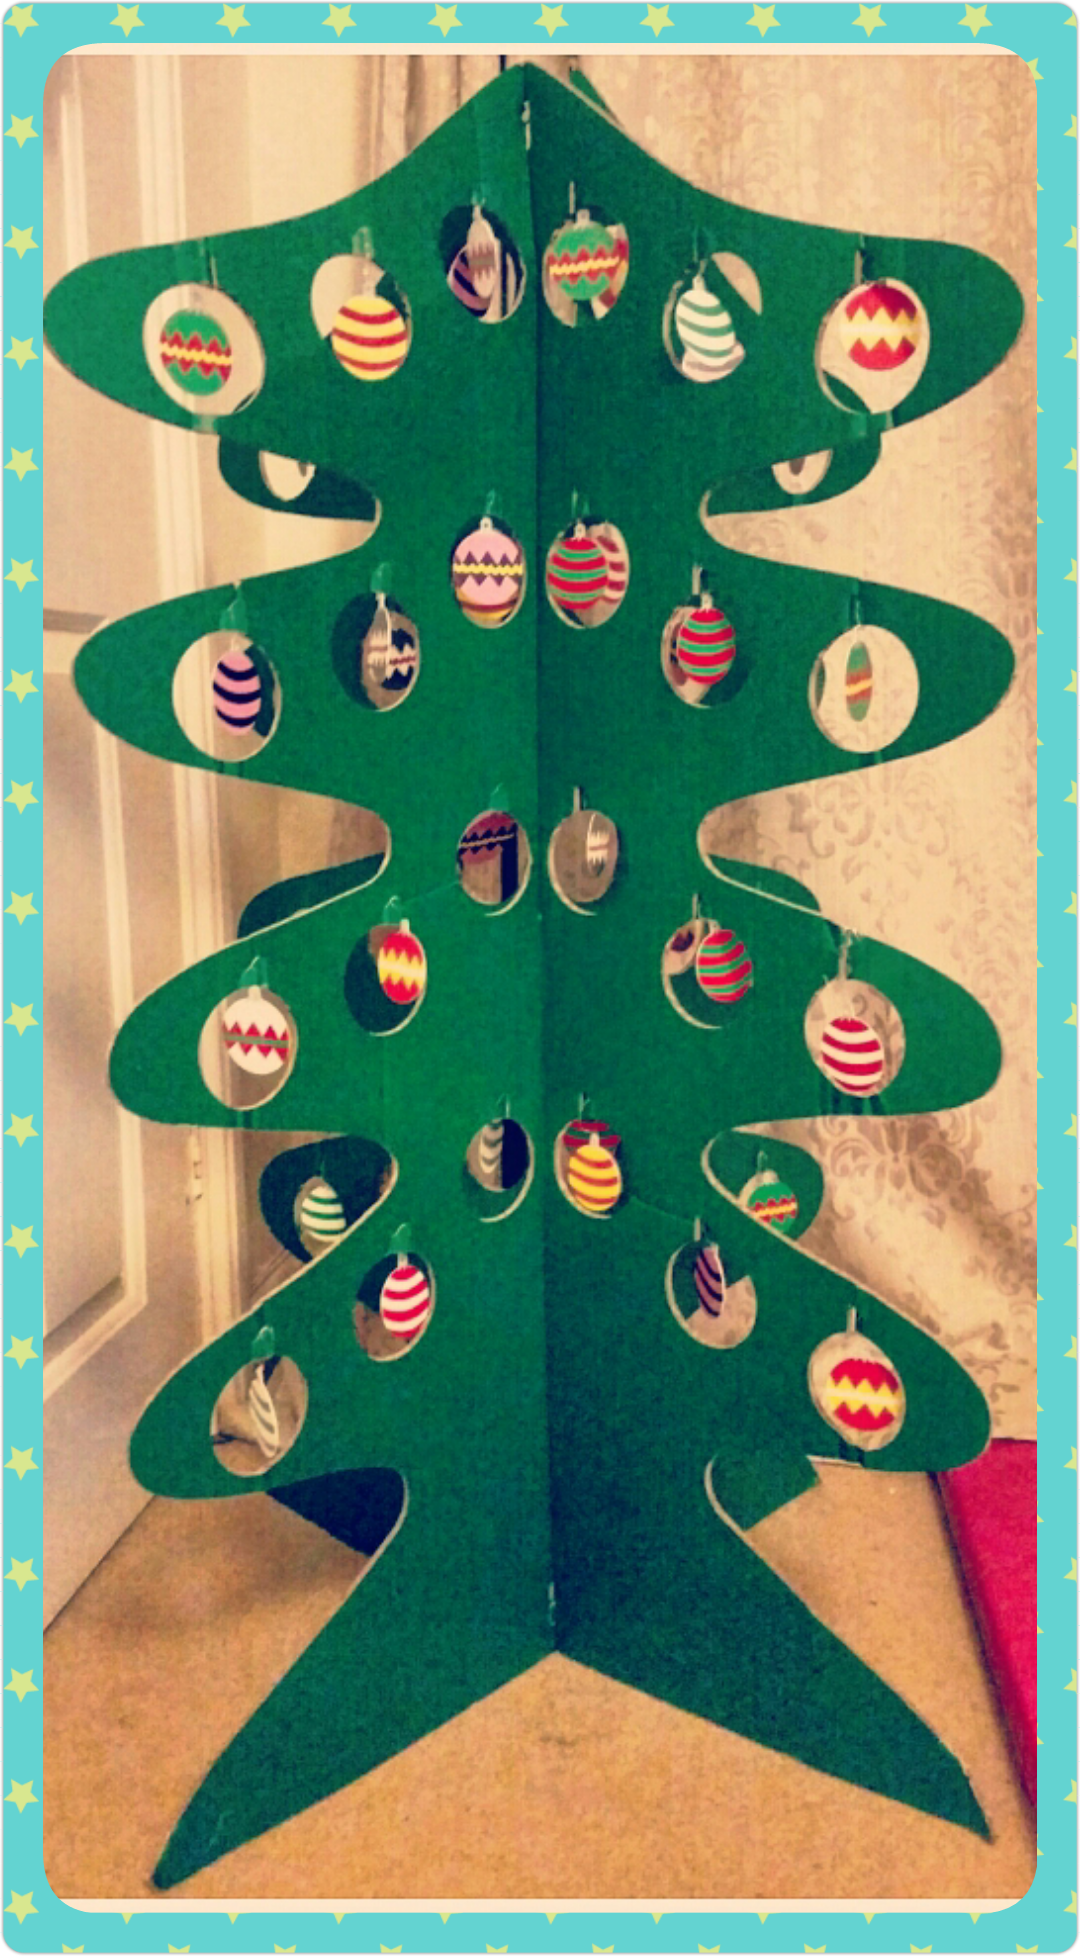 Christmas, decorations, reuse, recycle, eco, environment, DIY, festive decor, cardboard tree